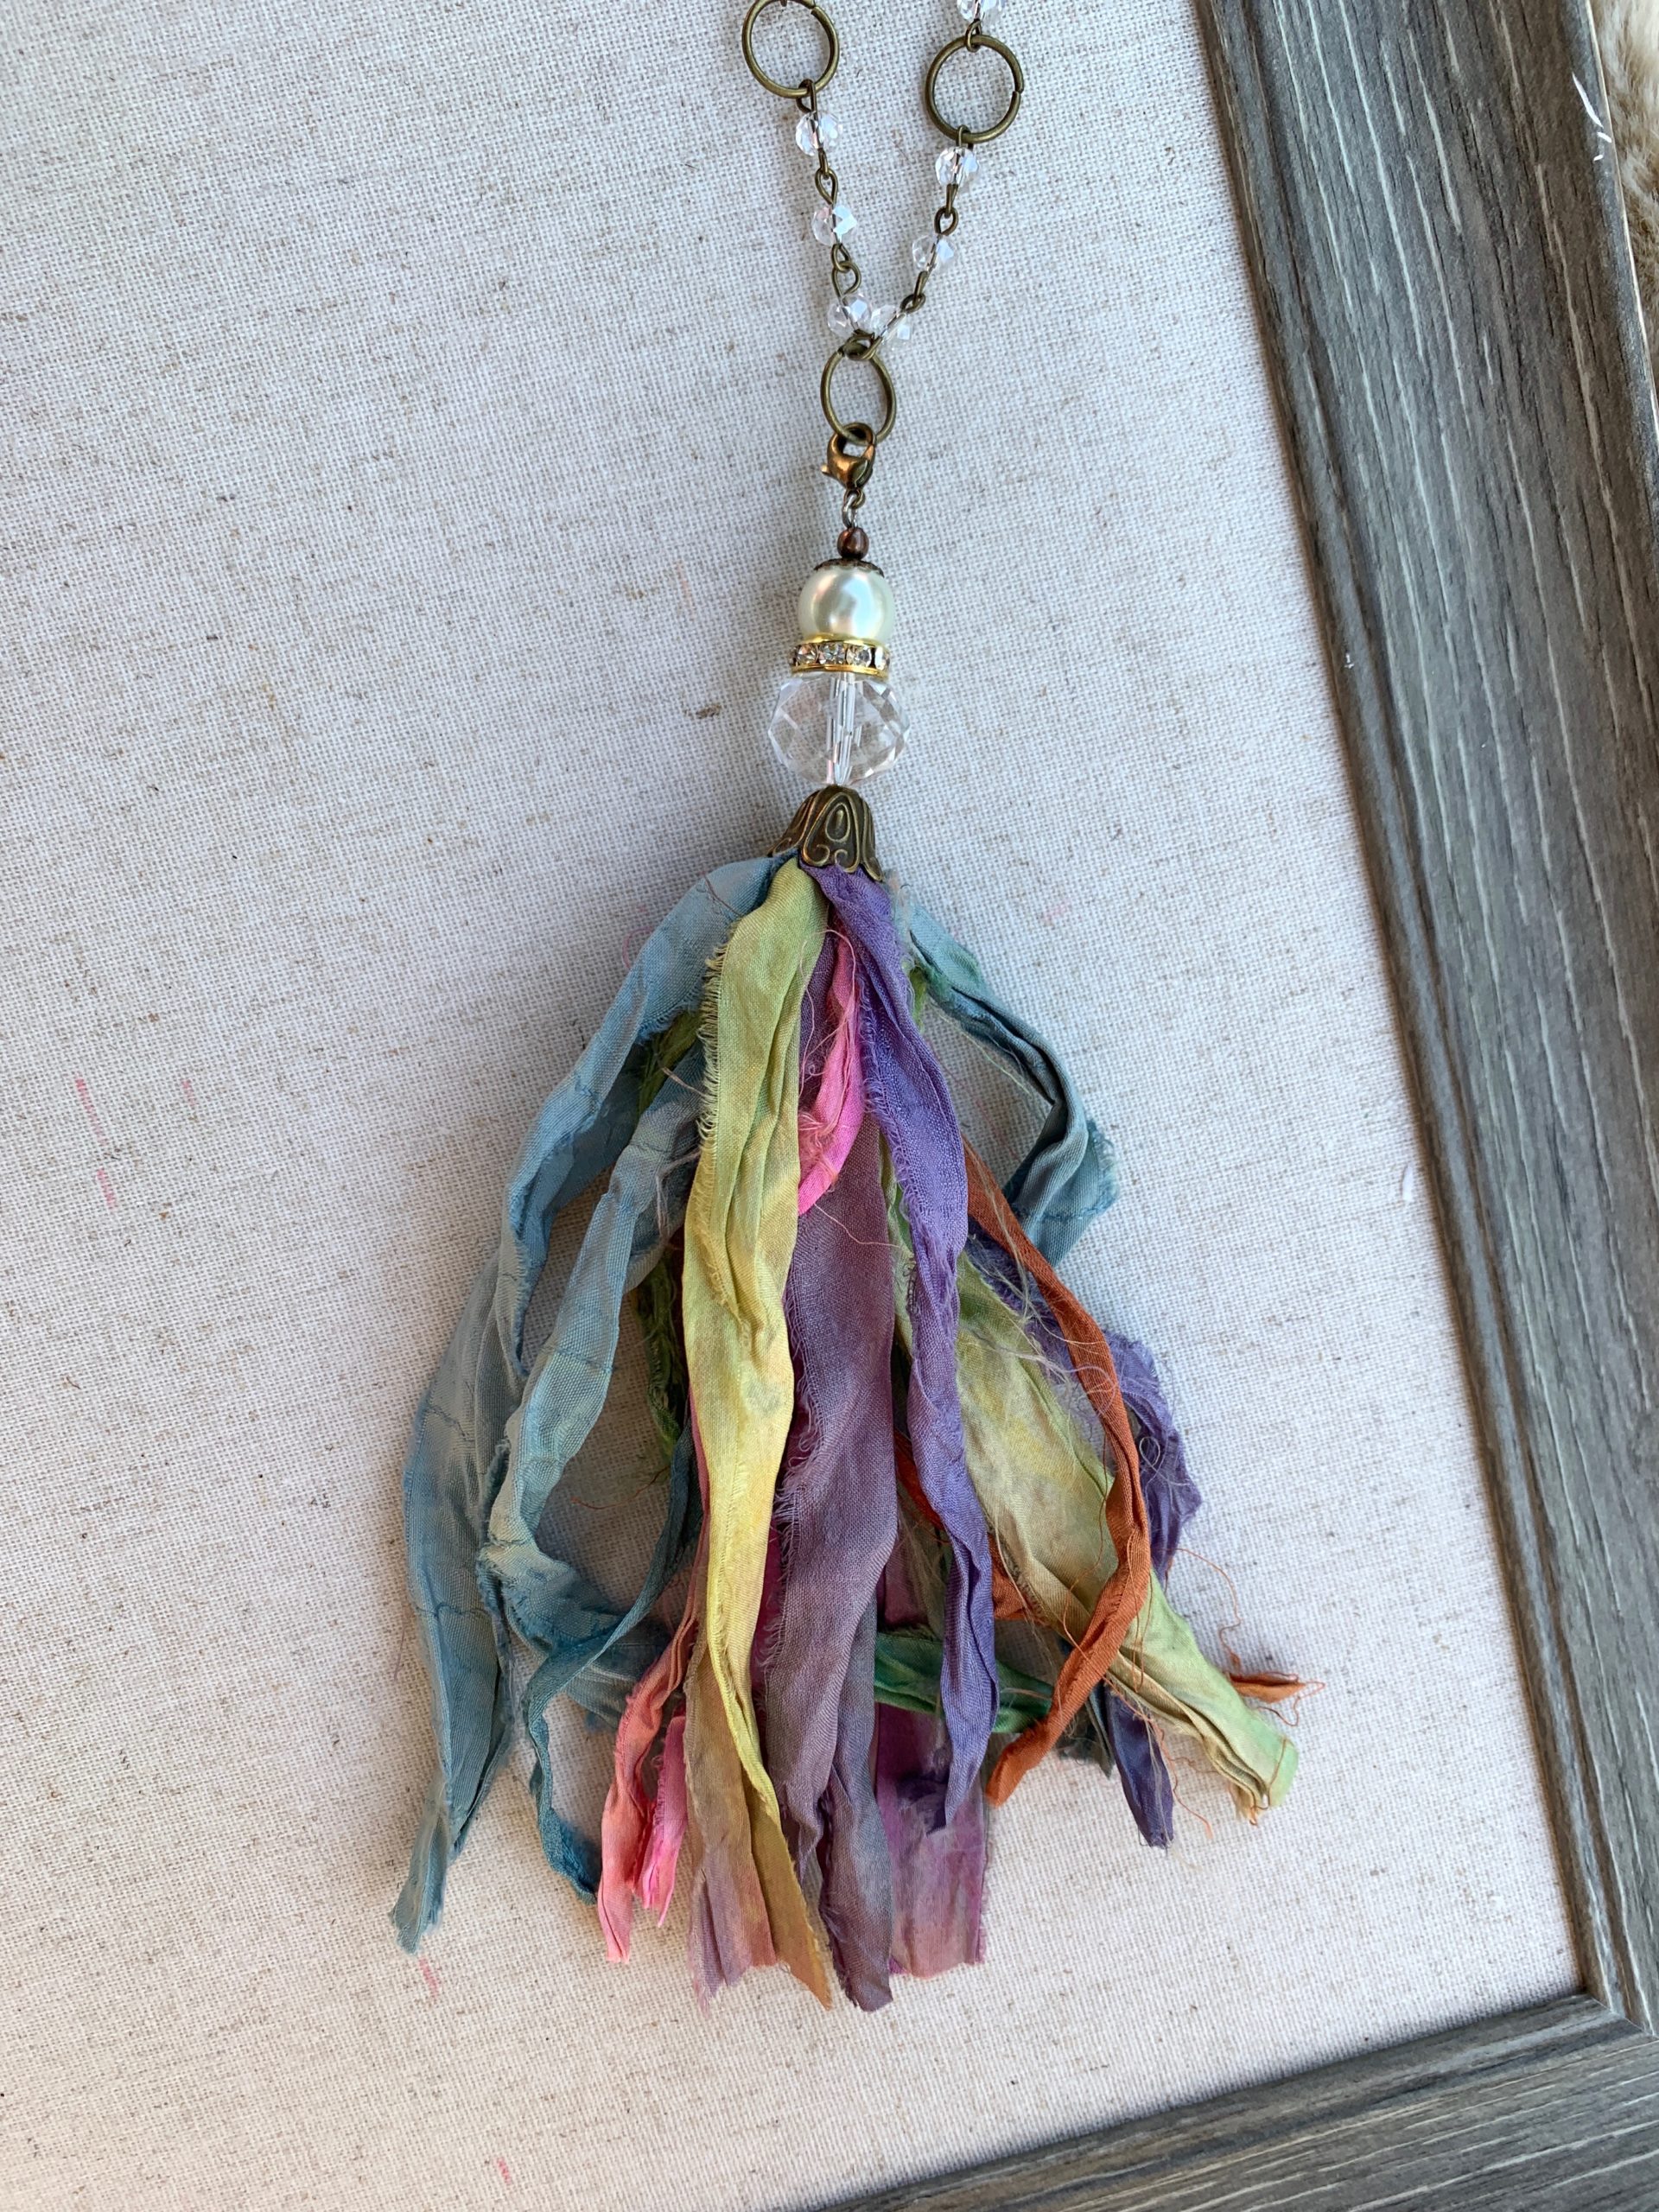 Handmade Rainbow Tassel Necklace On Beaded Chain - The Shabby Tree